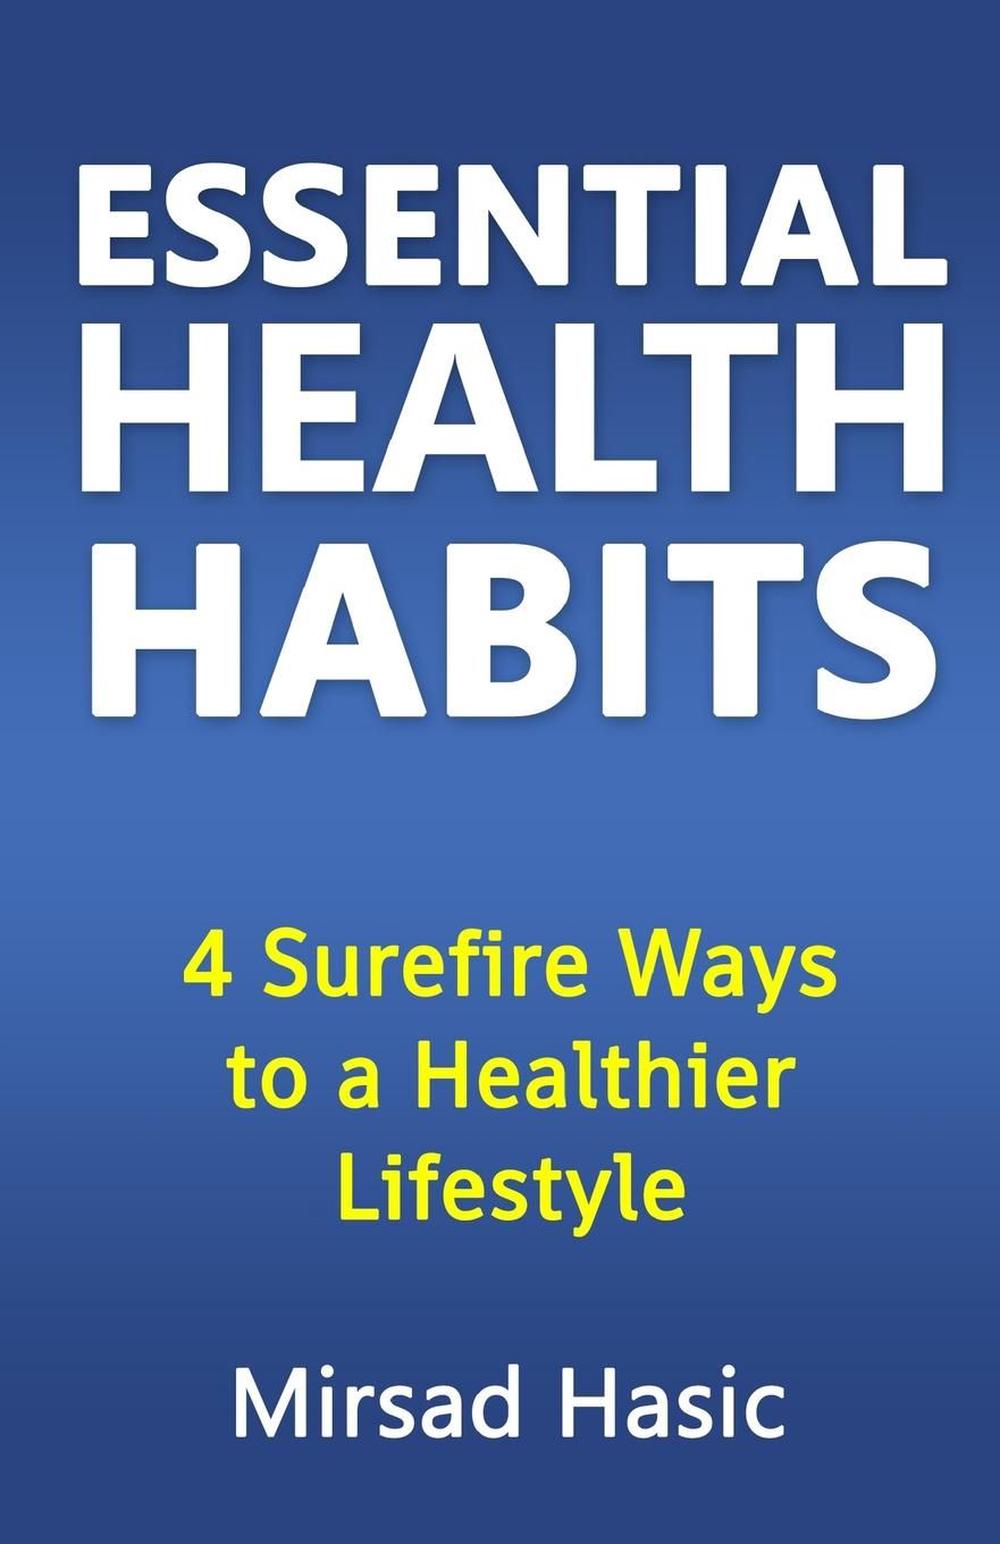 habits of health audiobook